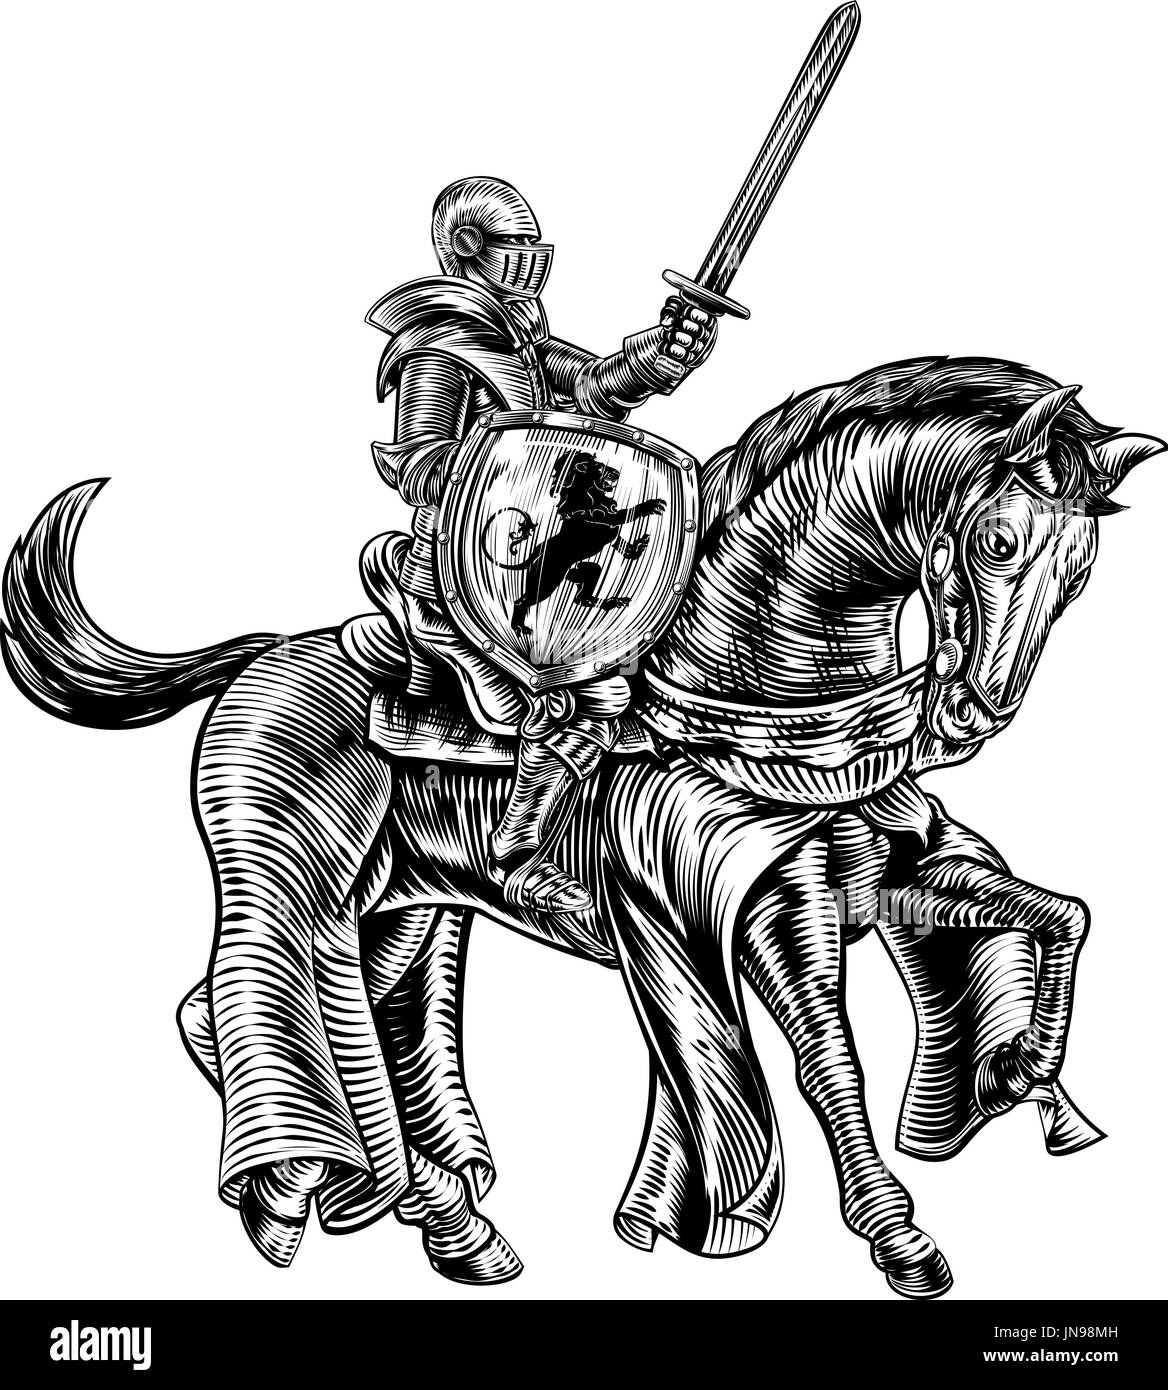 Mittelalterliche Ritter auf Pferd Vintage Holzschnitt Gravur Stock Vektor